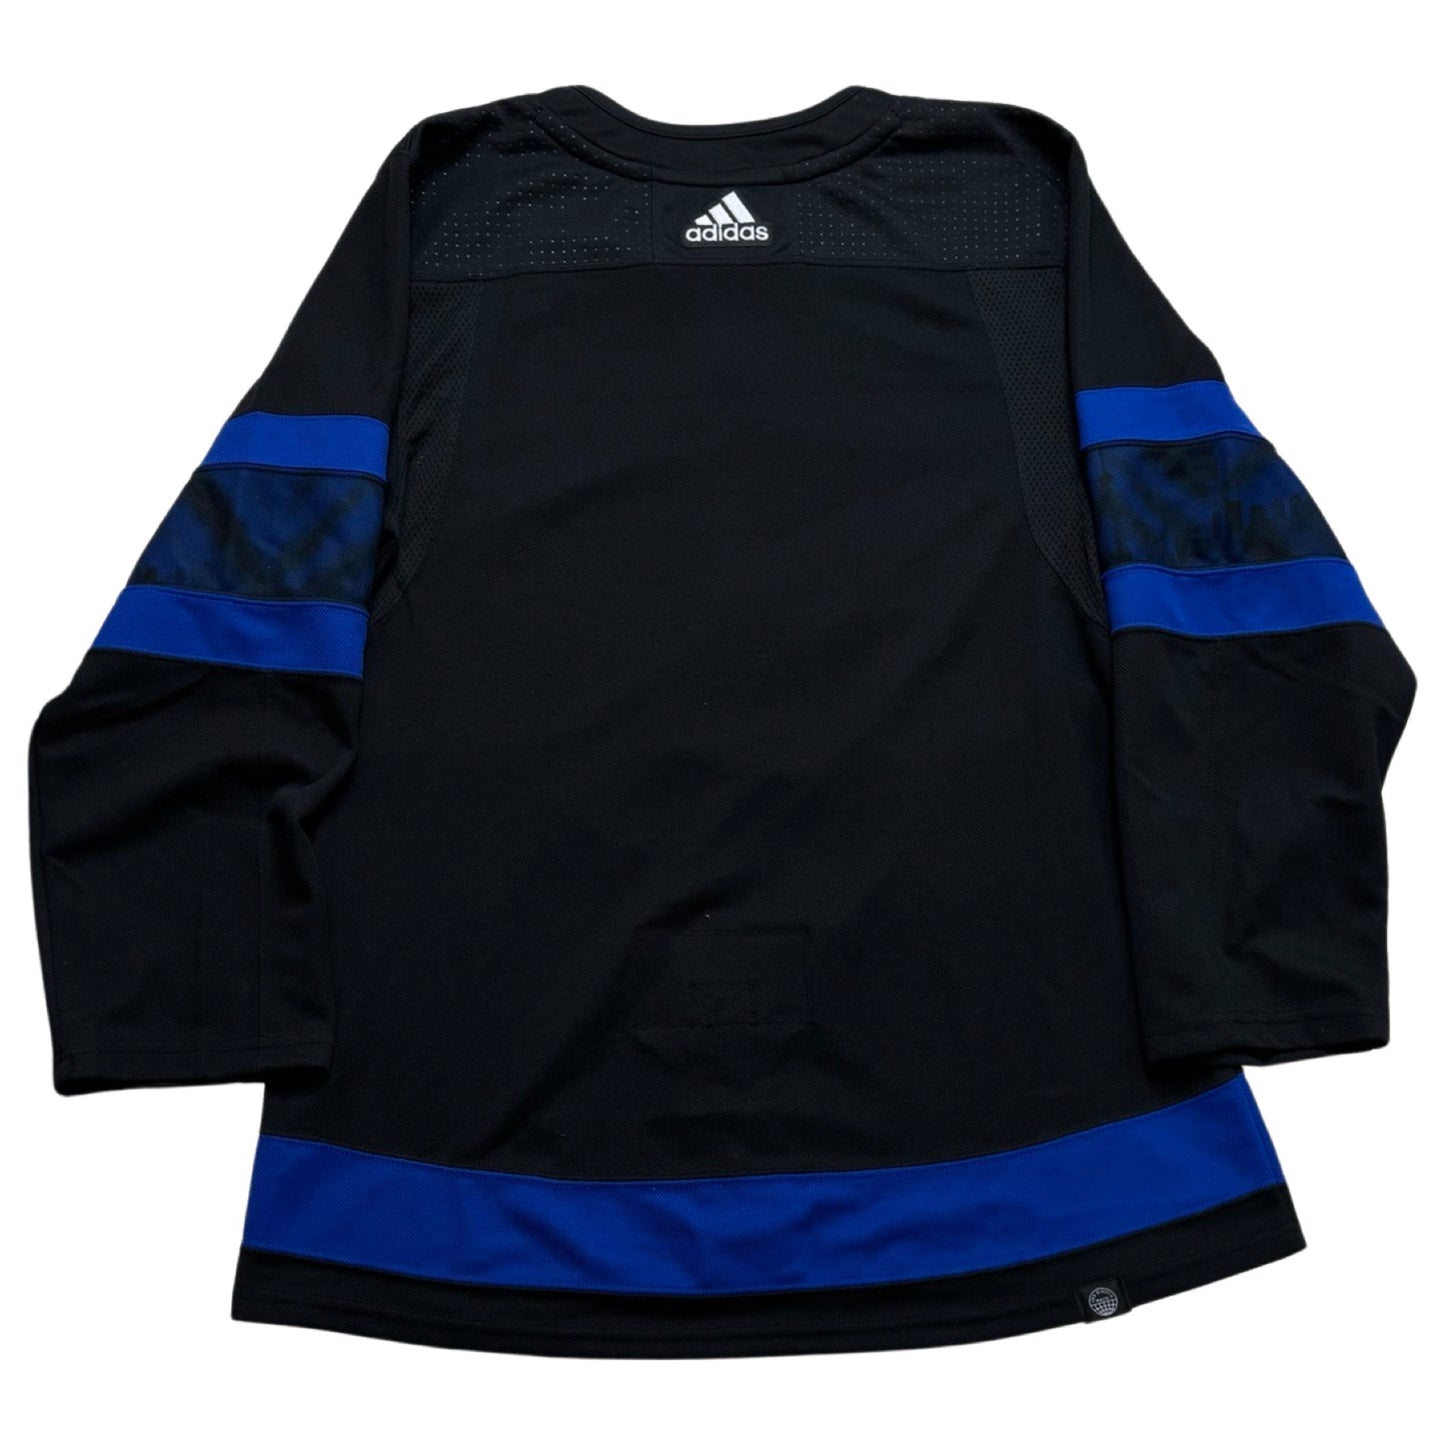 Toronto Maple Leafs Authentic Adidas Hockey Jersey Size 46 Black NHL